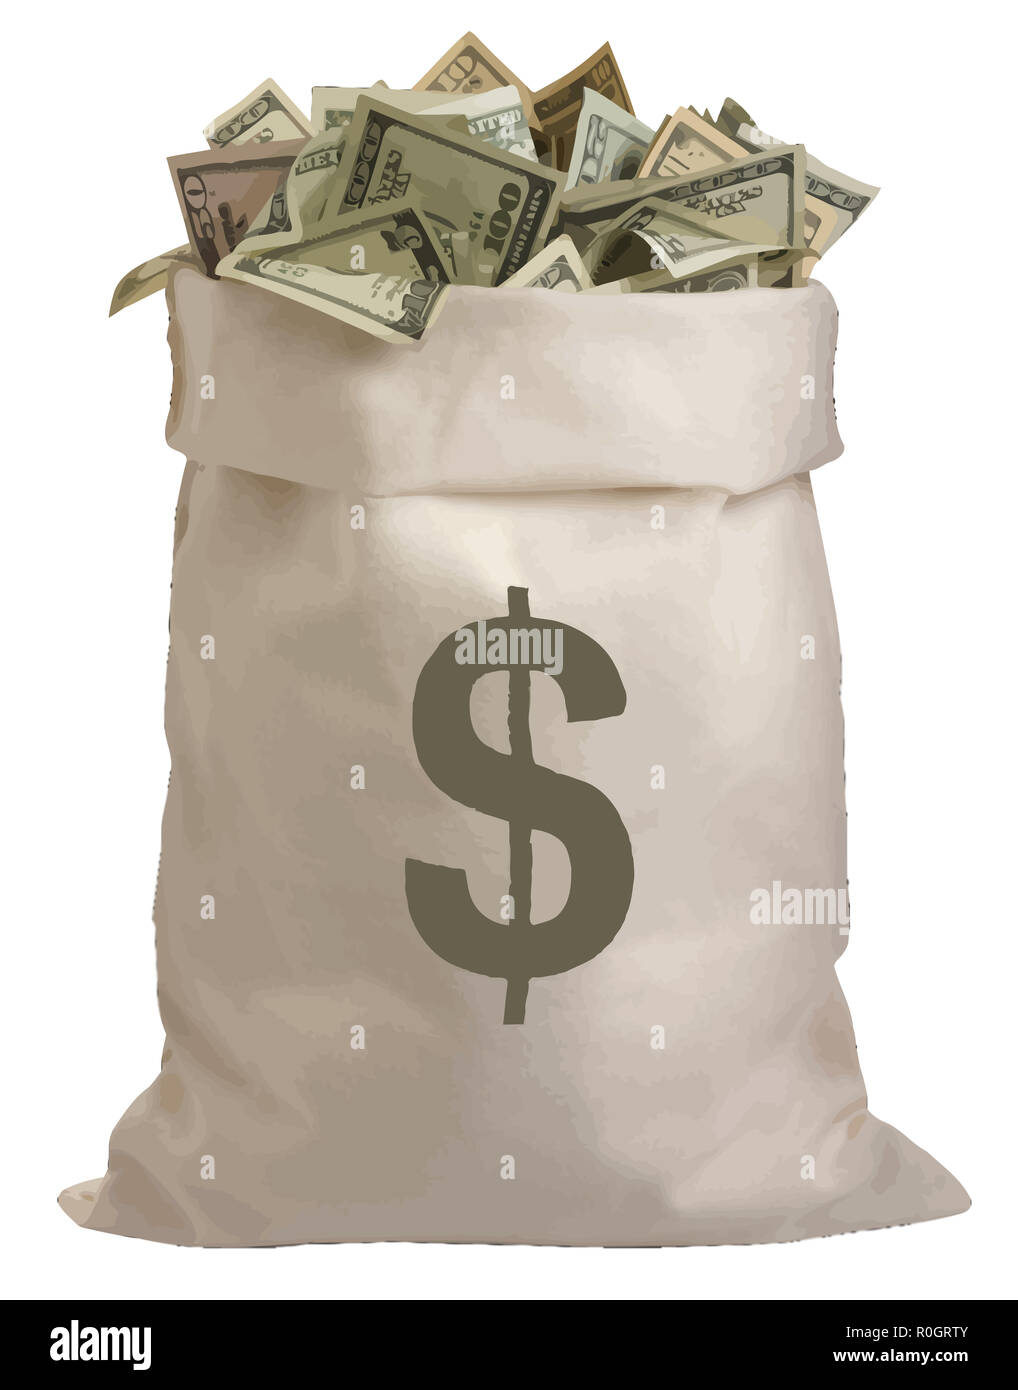 bag of money sack profit savings bank cash illustration Stock Photo - Alamy